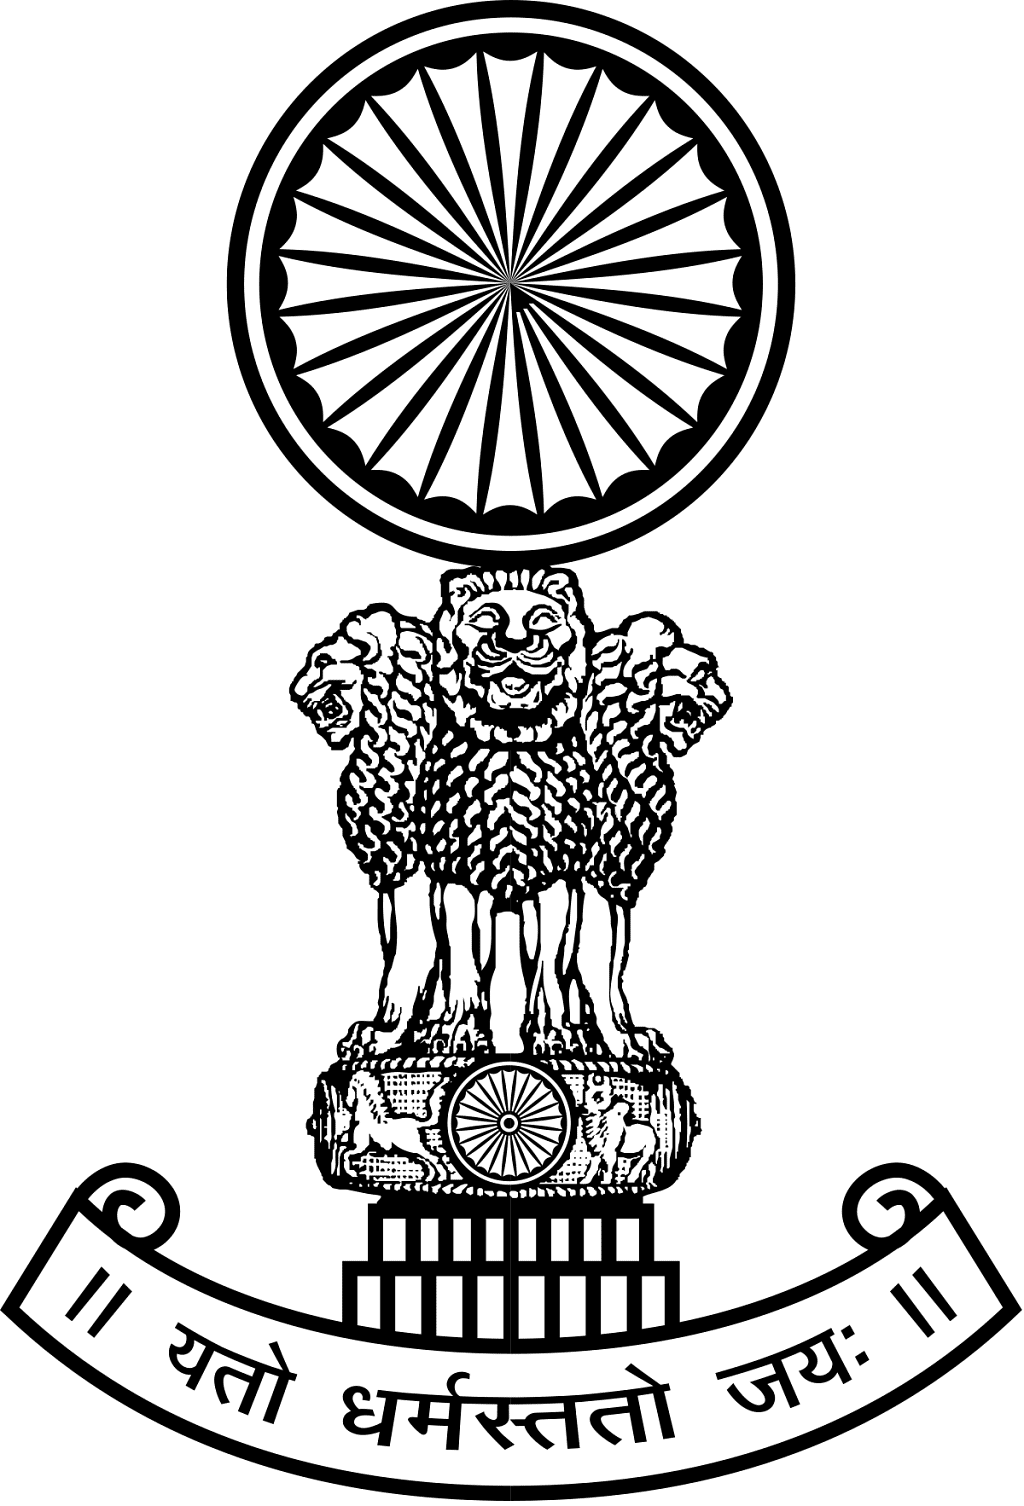 Logo of supreme court of India